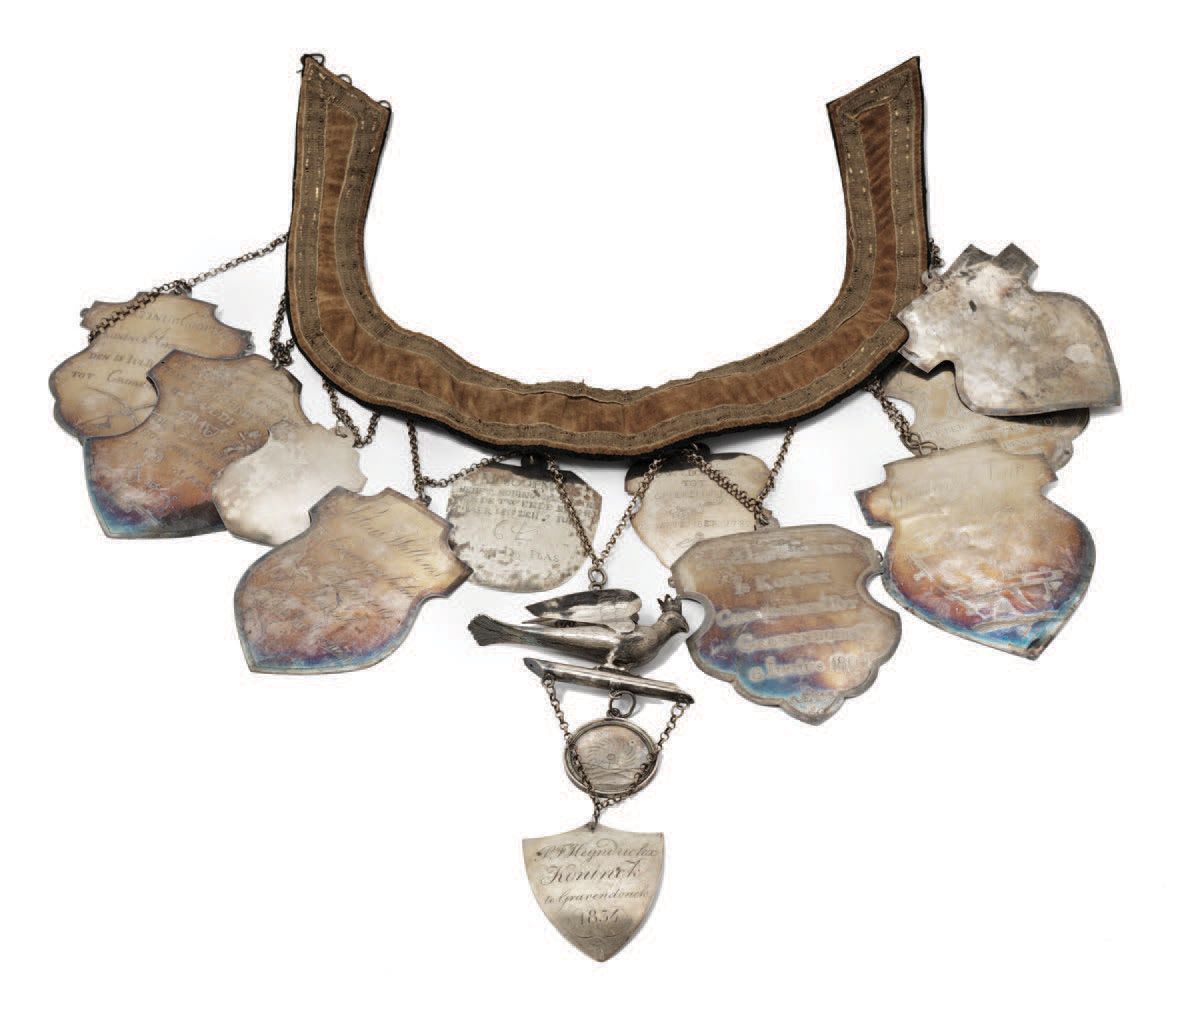 Null GILDENHALSKETTE AUS SILBER Belgien, 19. Jahrhundert
Diese Gilde-Halskette v&hellip;